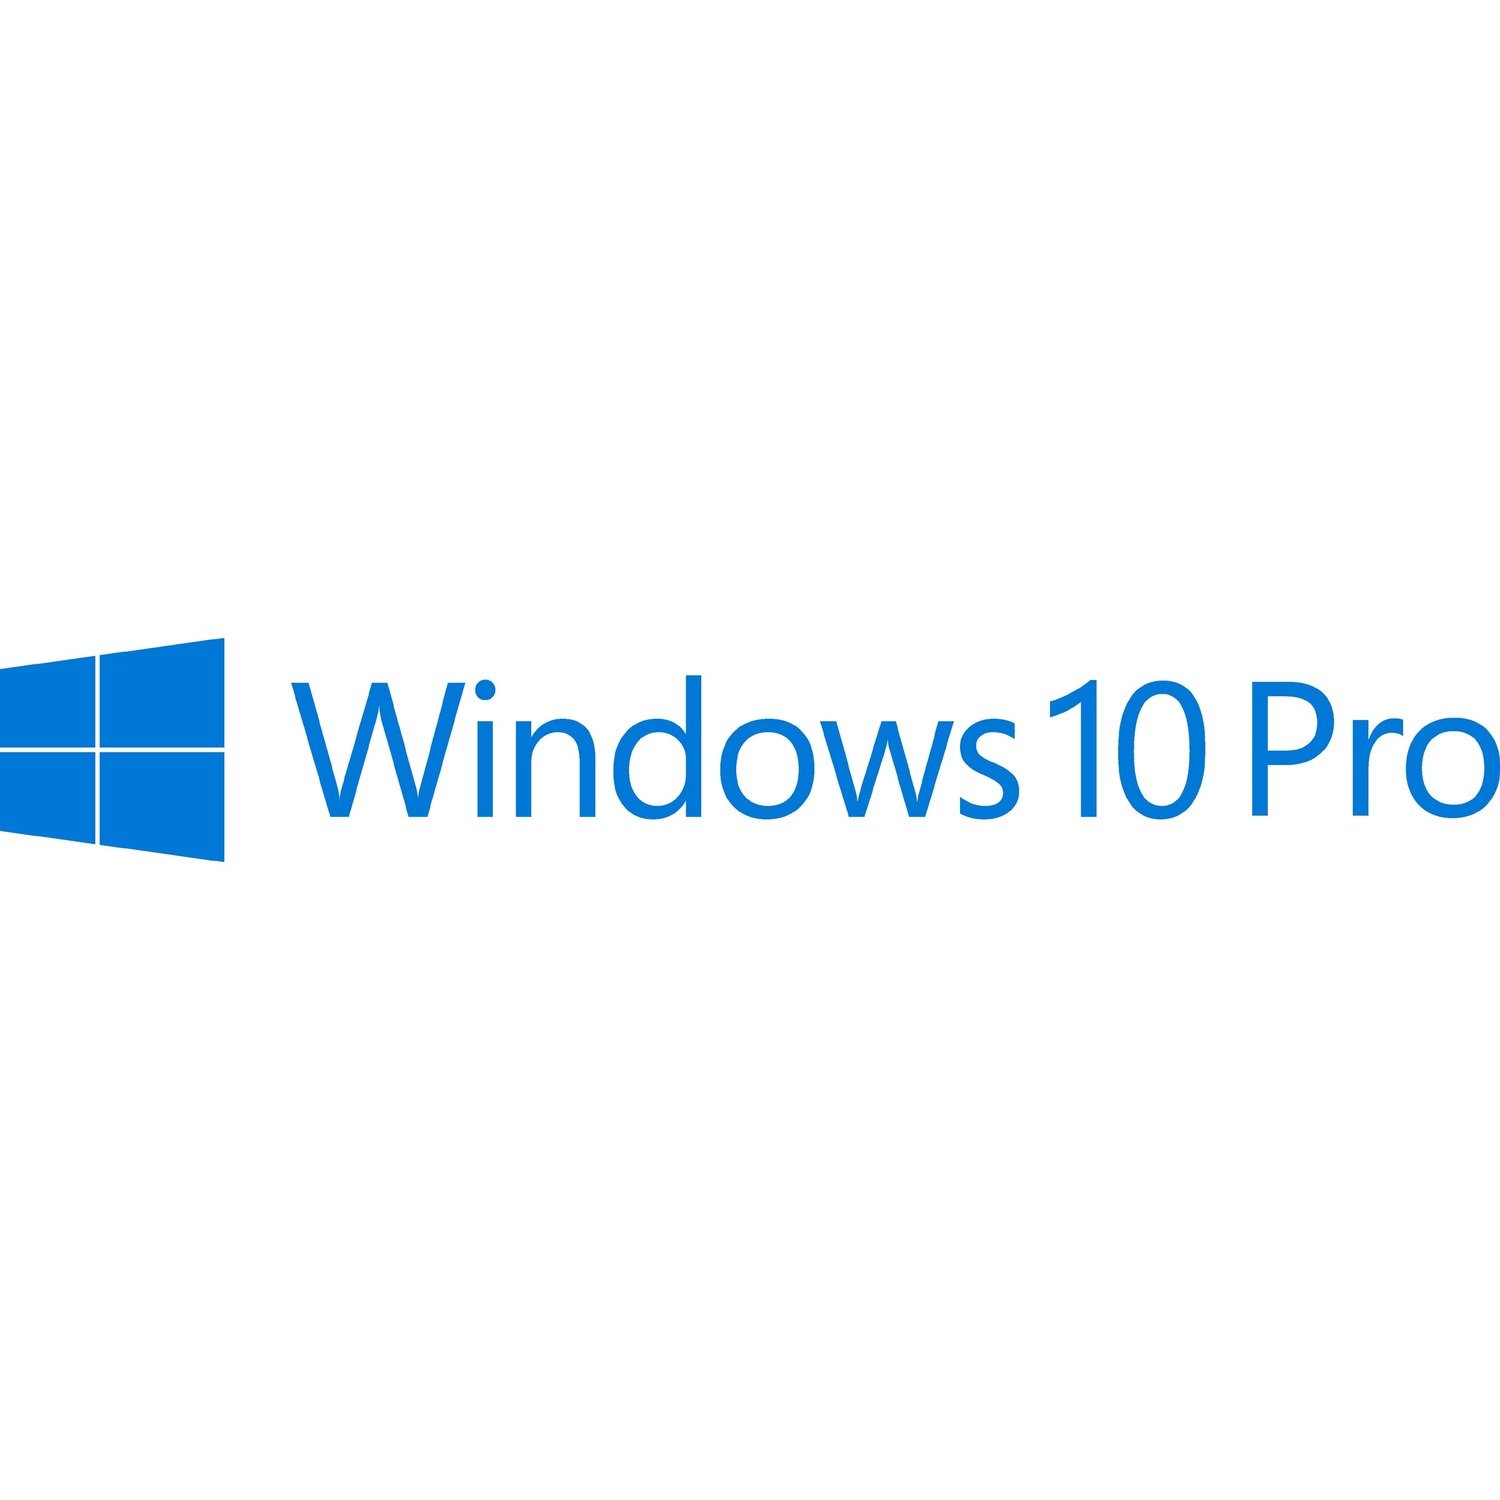 Microsoft Windows 10 Pro 64-bit - License - 1 License